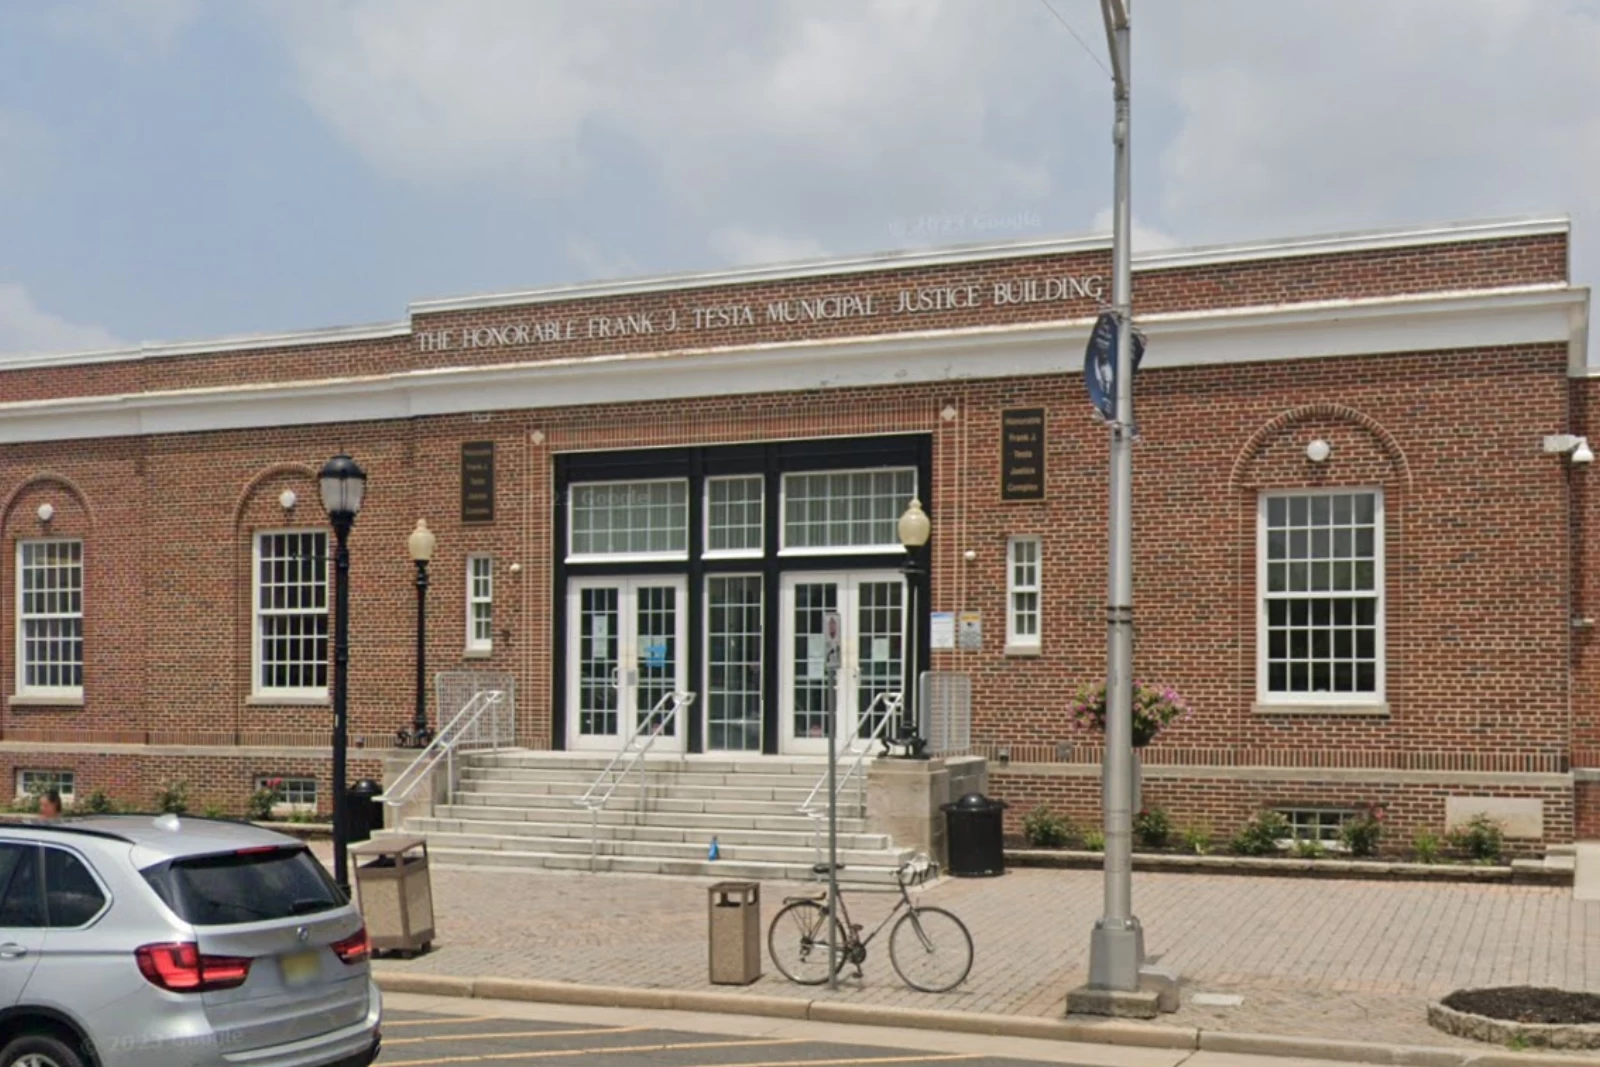 Vineland NJ Municipal Court - Photo: Google Maps